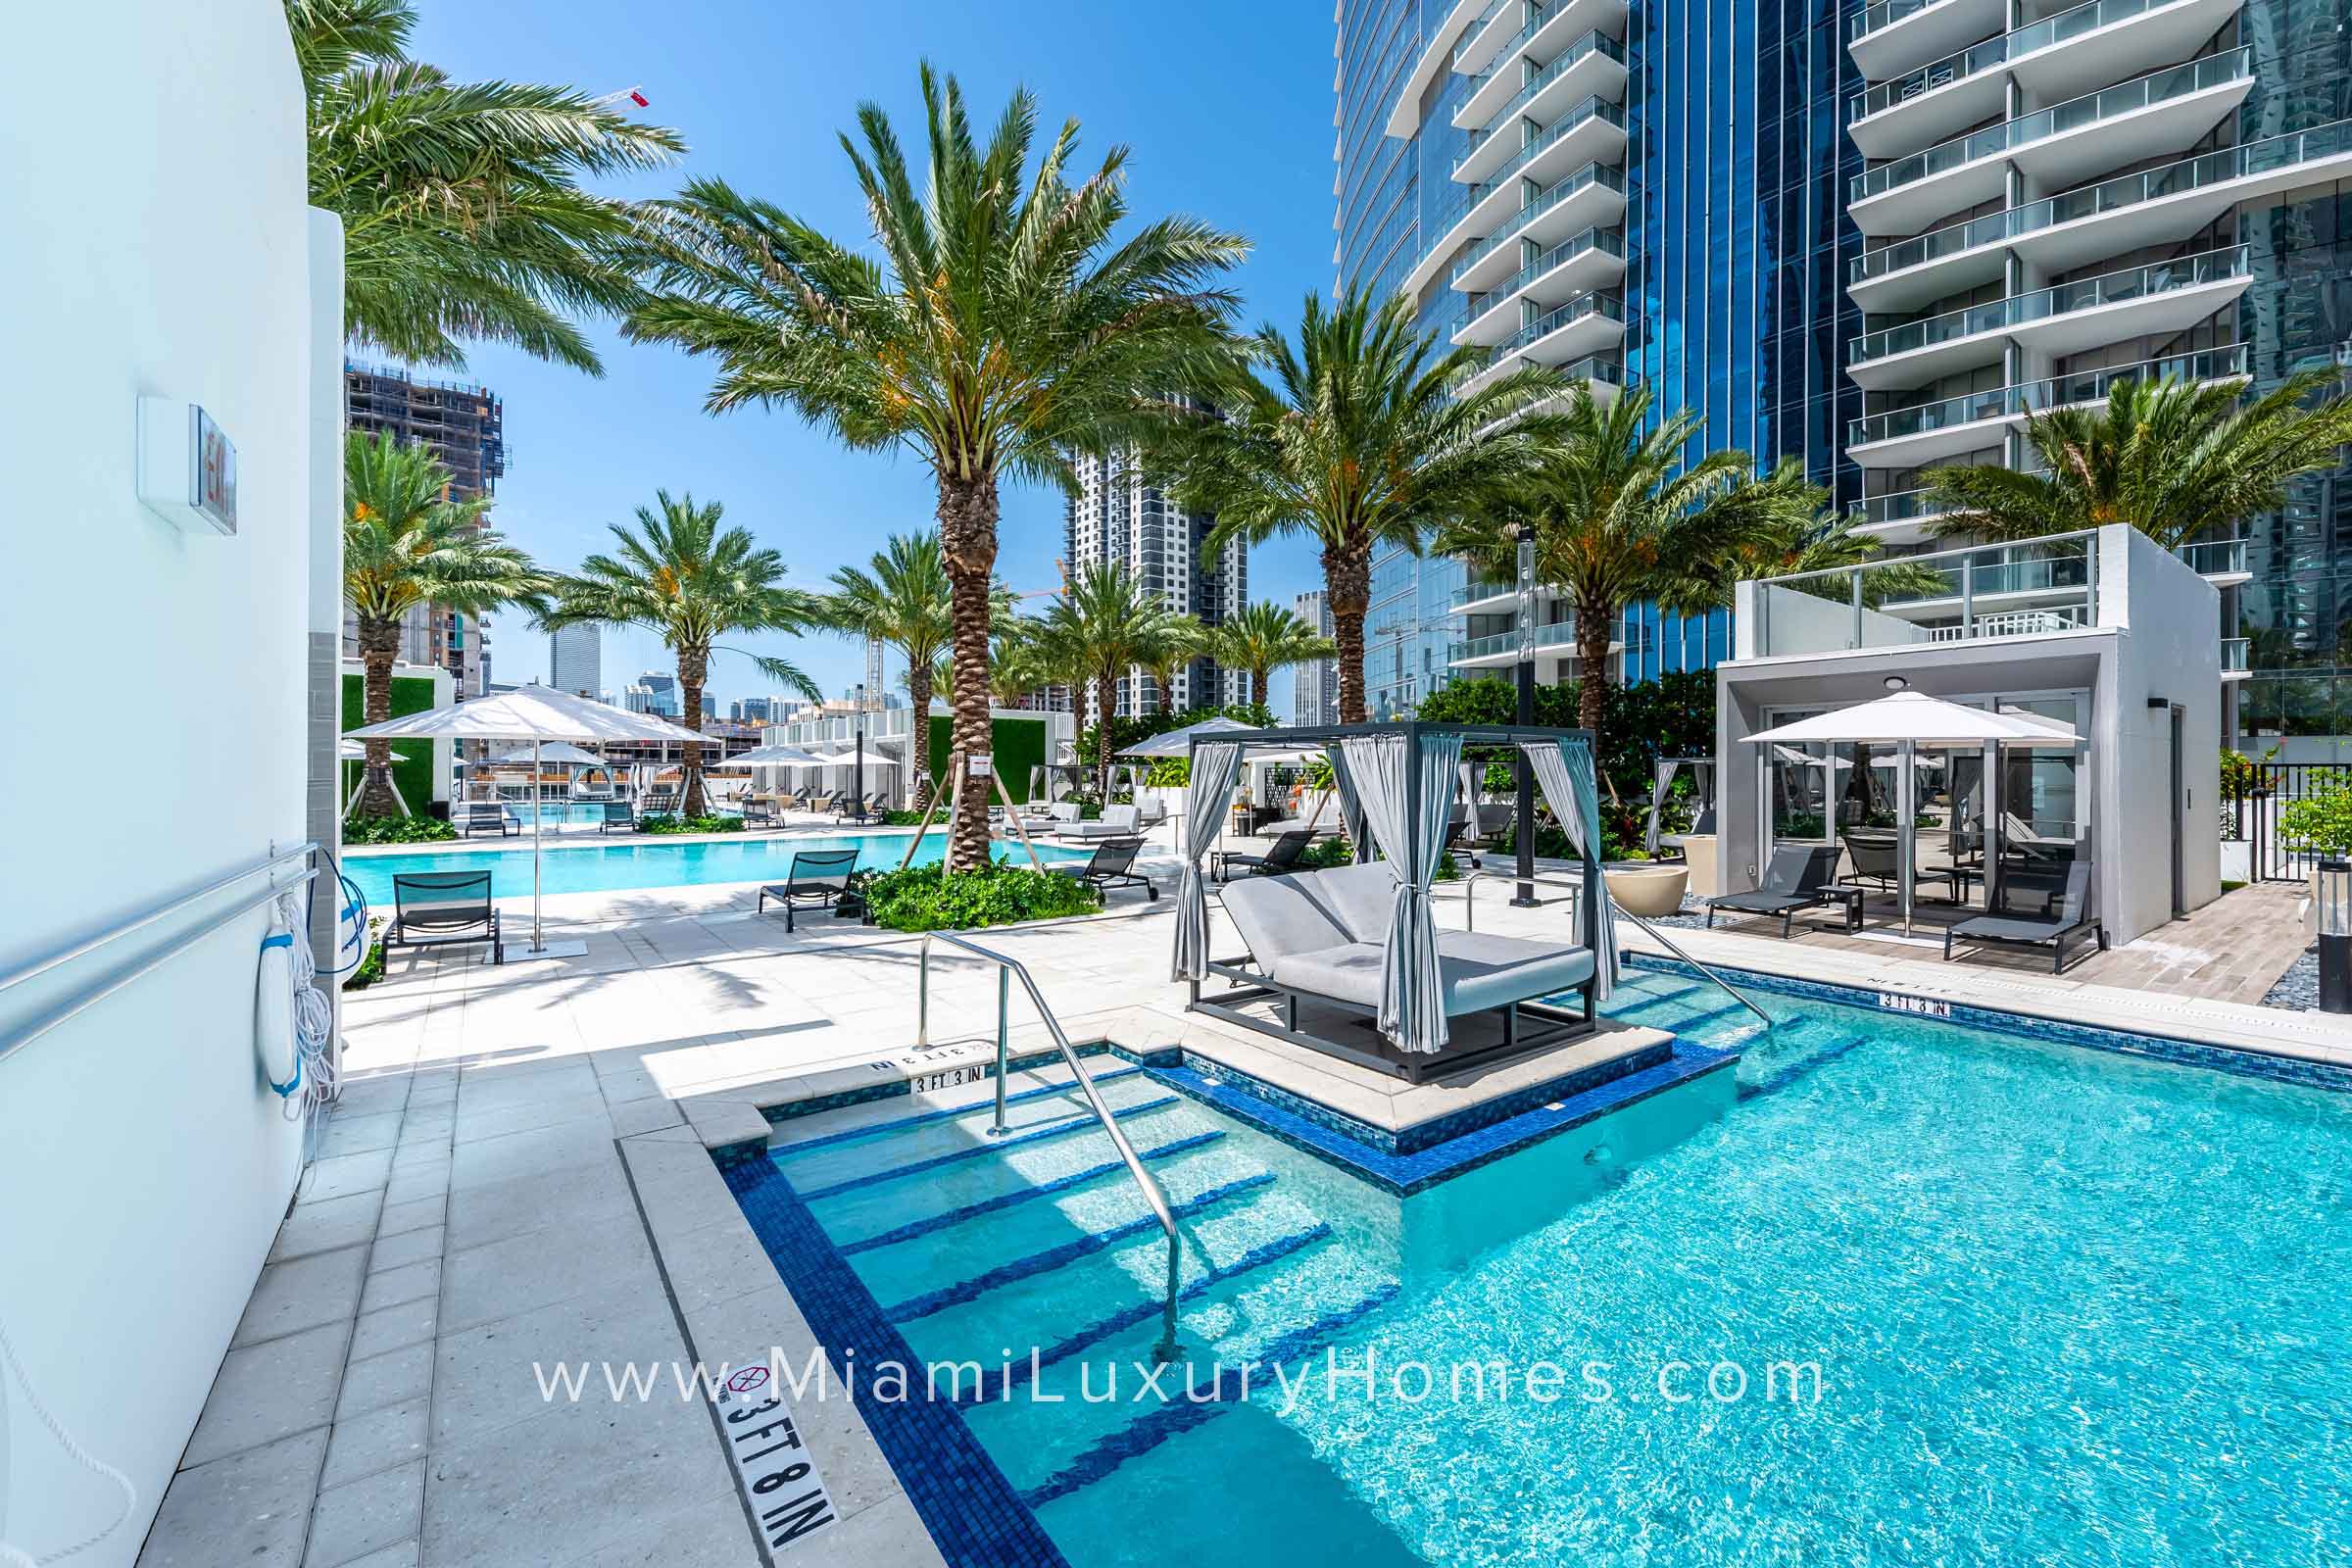 Paramount Miami Worldcenter Pool and Cabanas